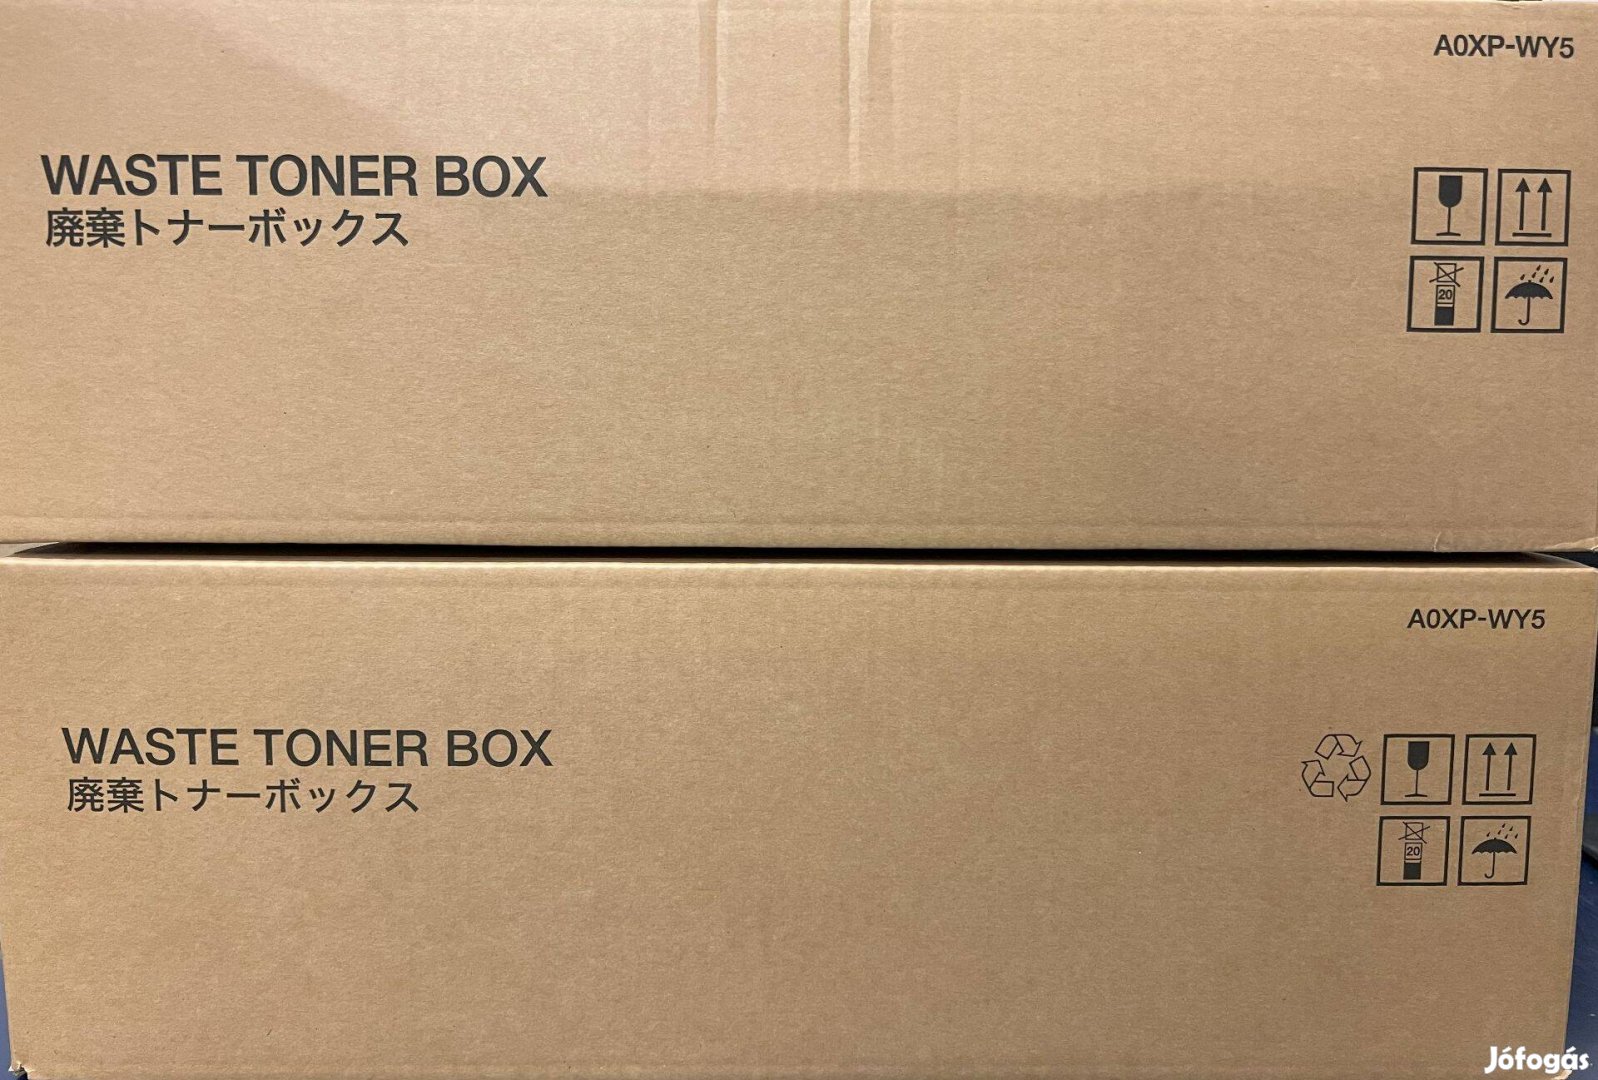 Konica Minolta Waste Toner Box - A0XP-WY5